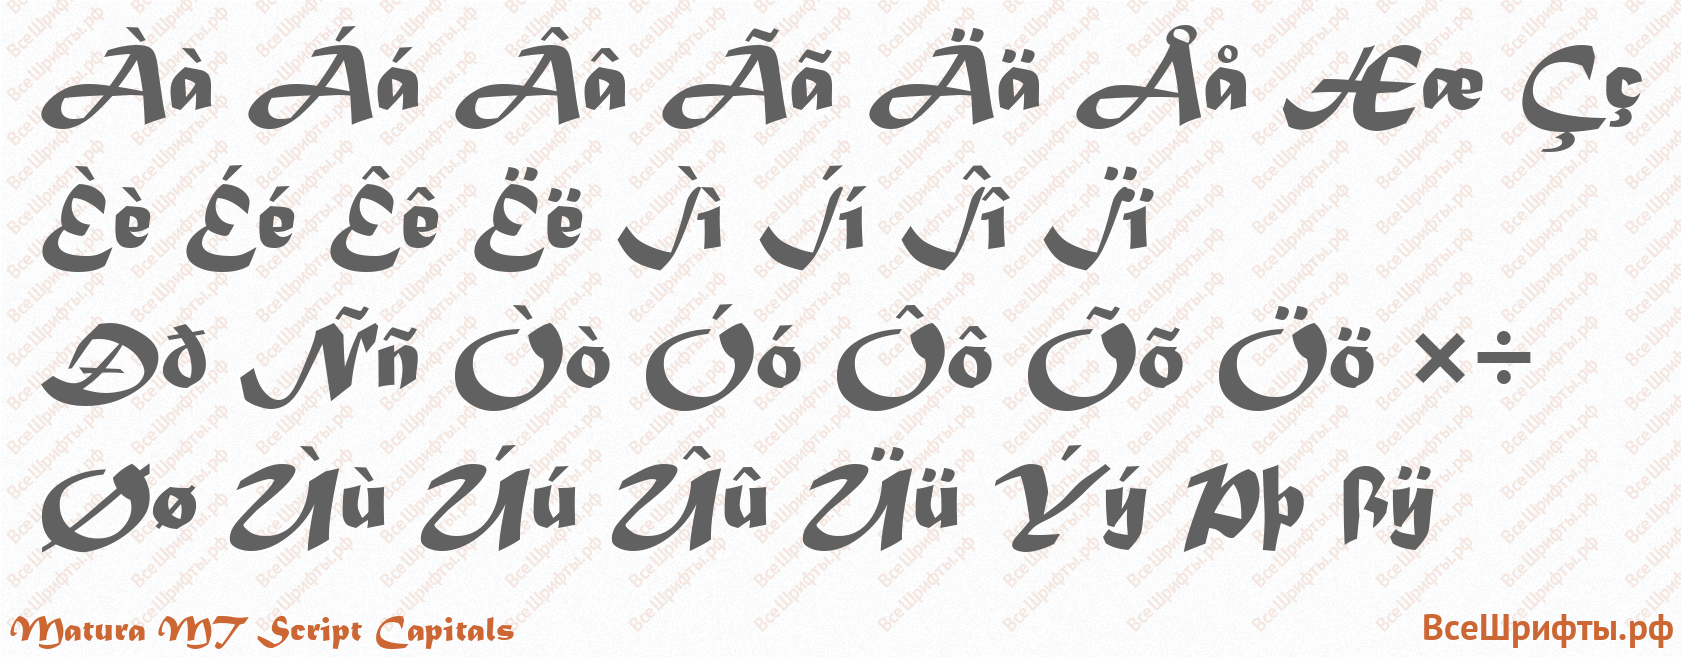 Шрифт Matura MT Script Capitals с русскими буквами